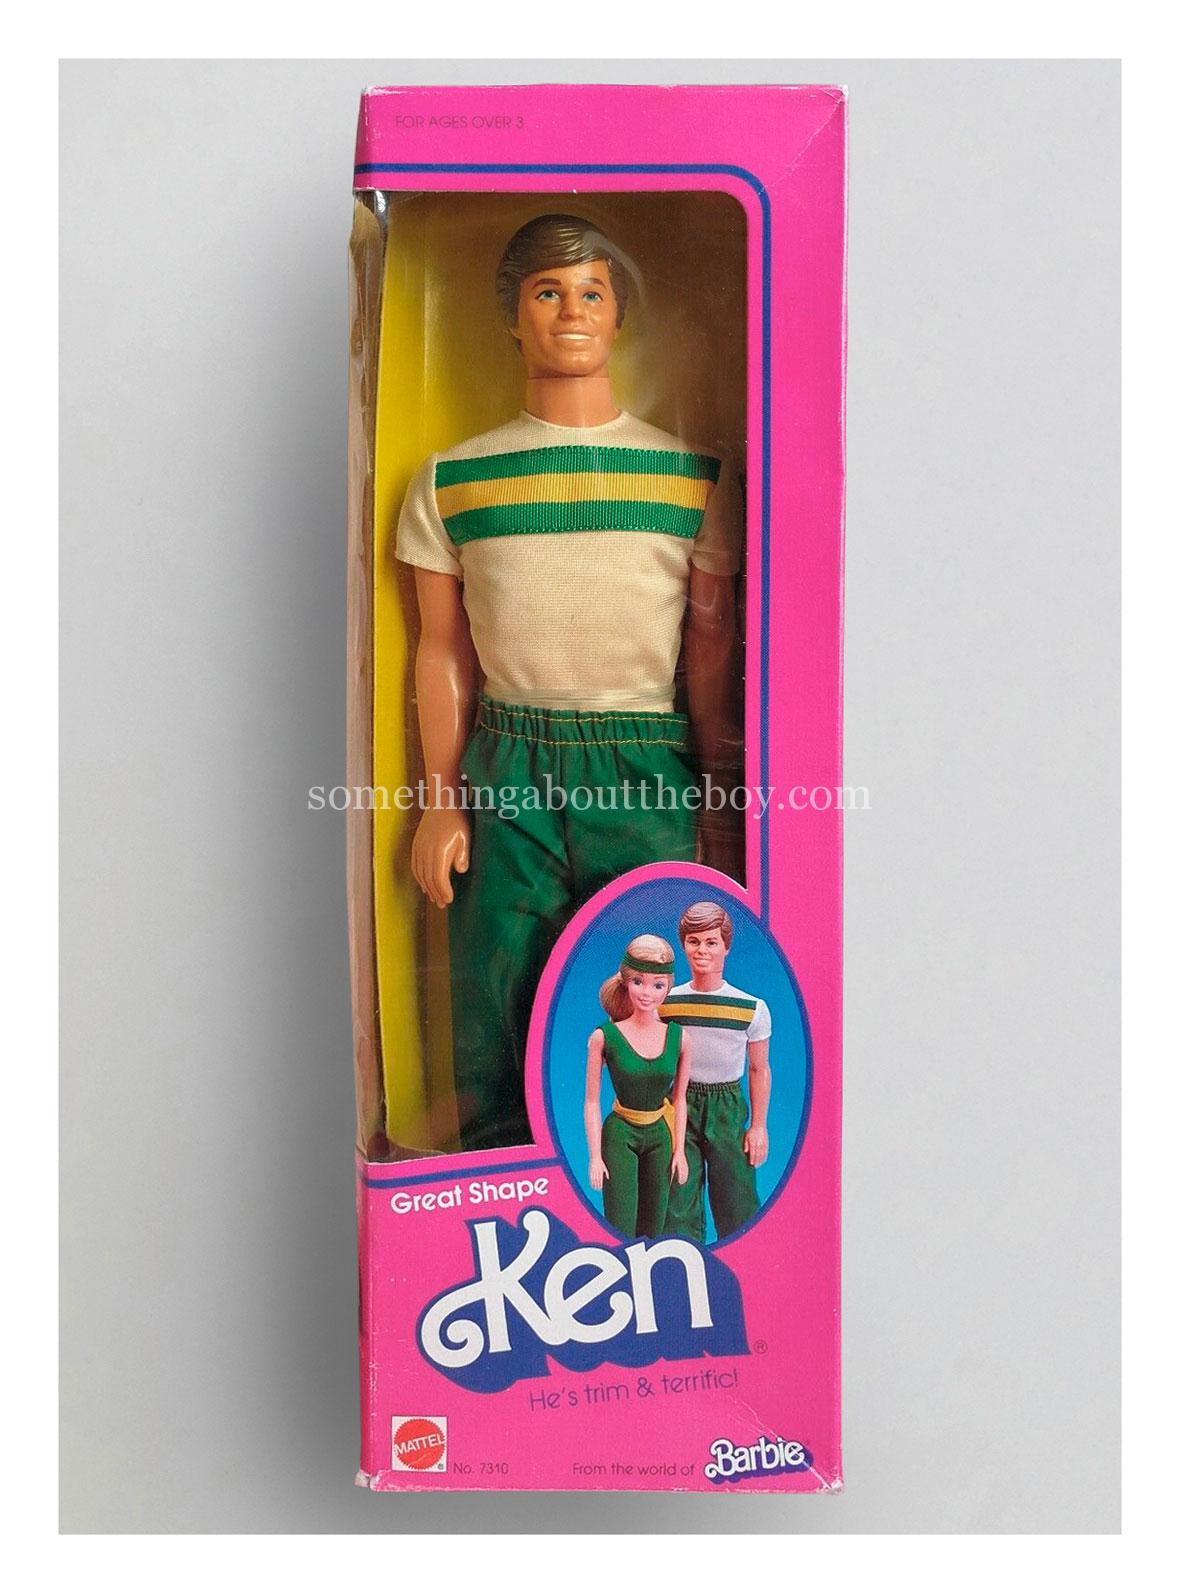 1985 #7310 Great Shape Ken (British version)